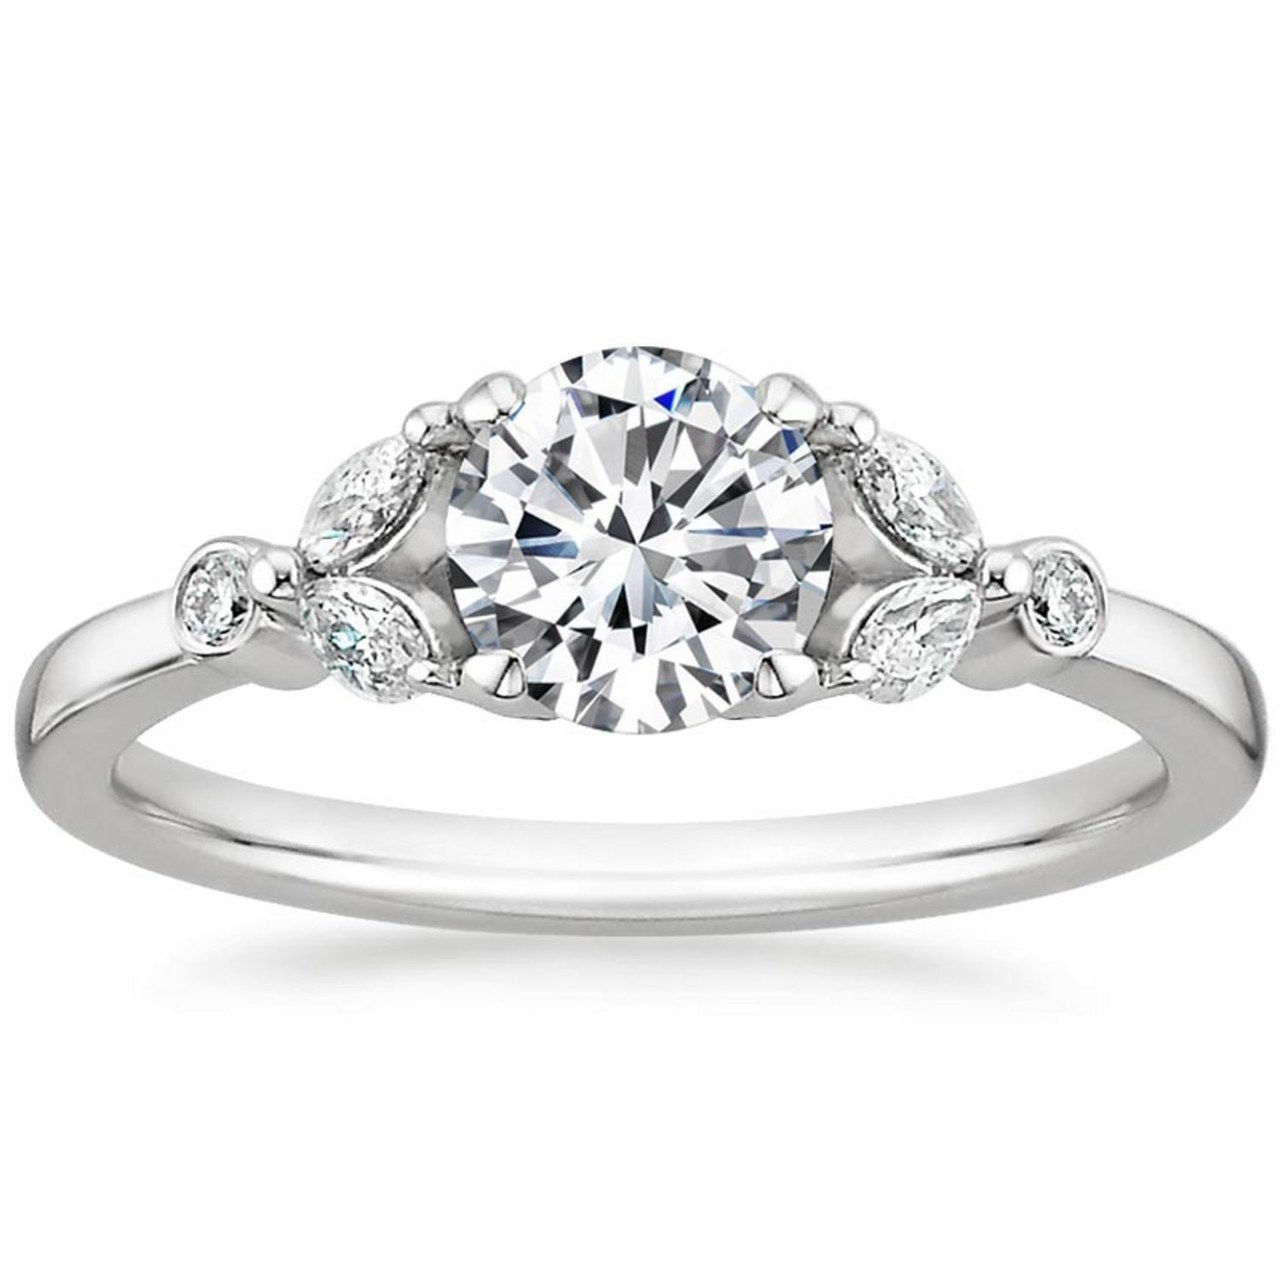 3 diamond engagement rings 0811